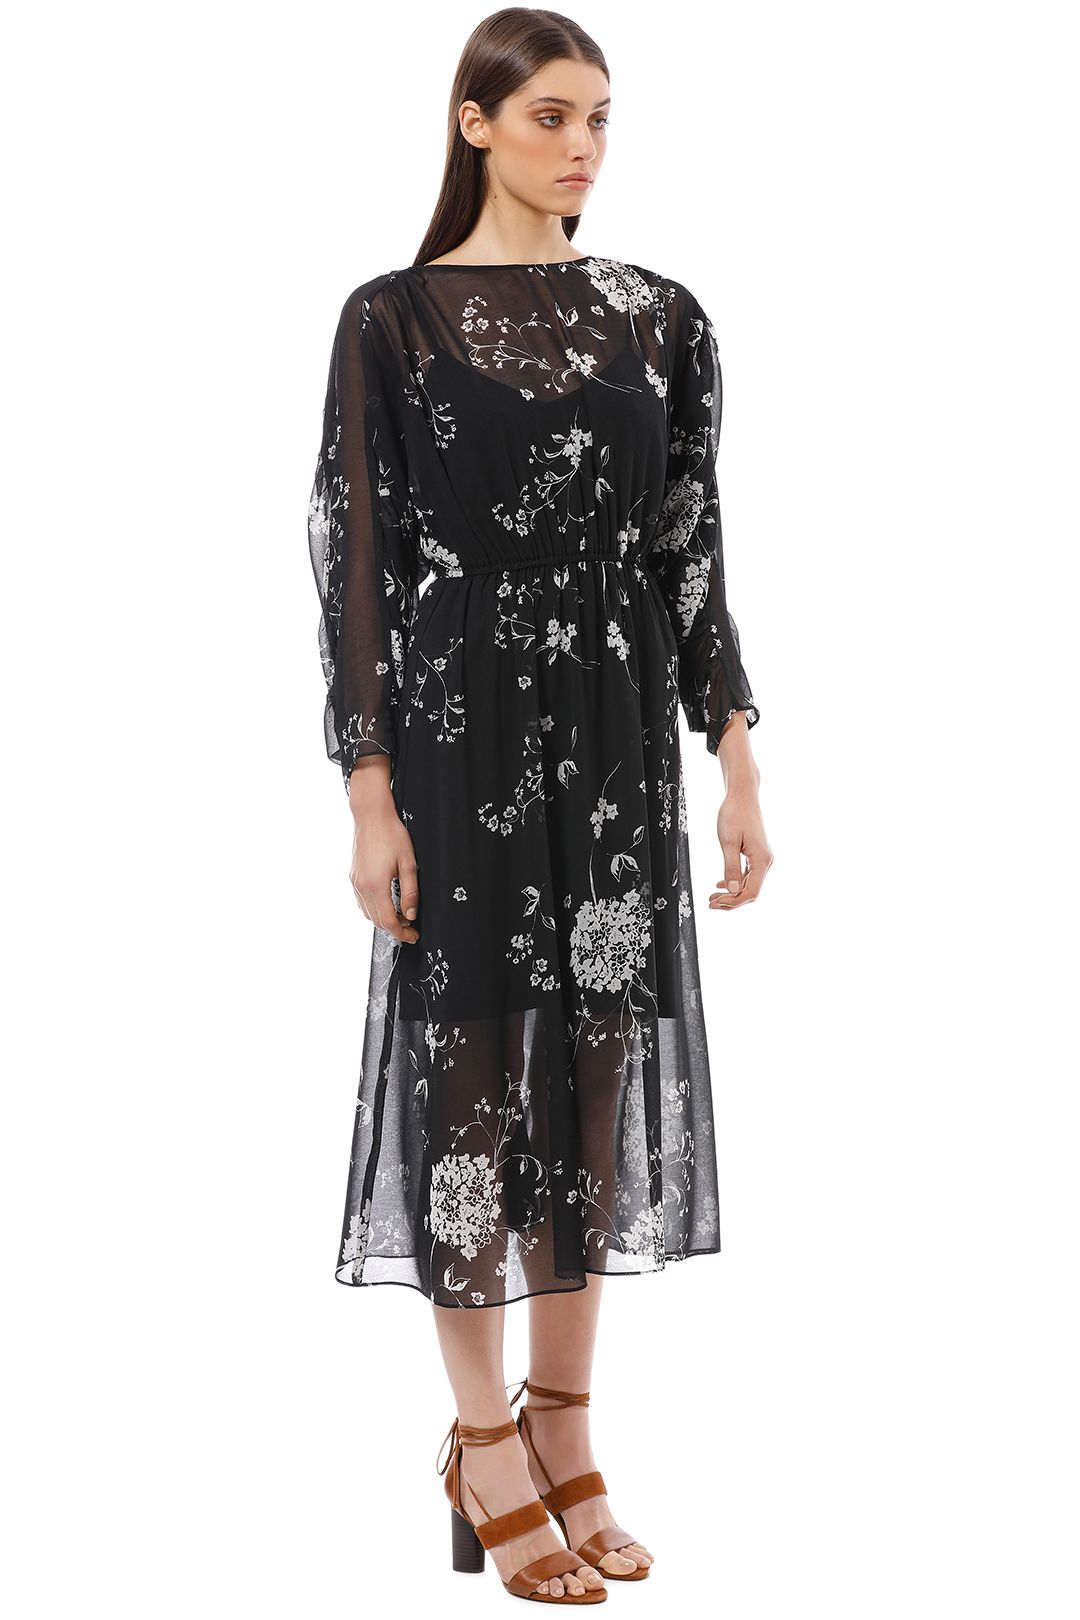 Veronika Maine - Monotone Floral Gathered Midi Dress - Black - Side